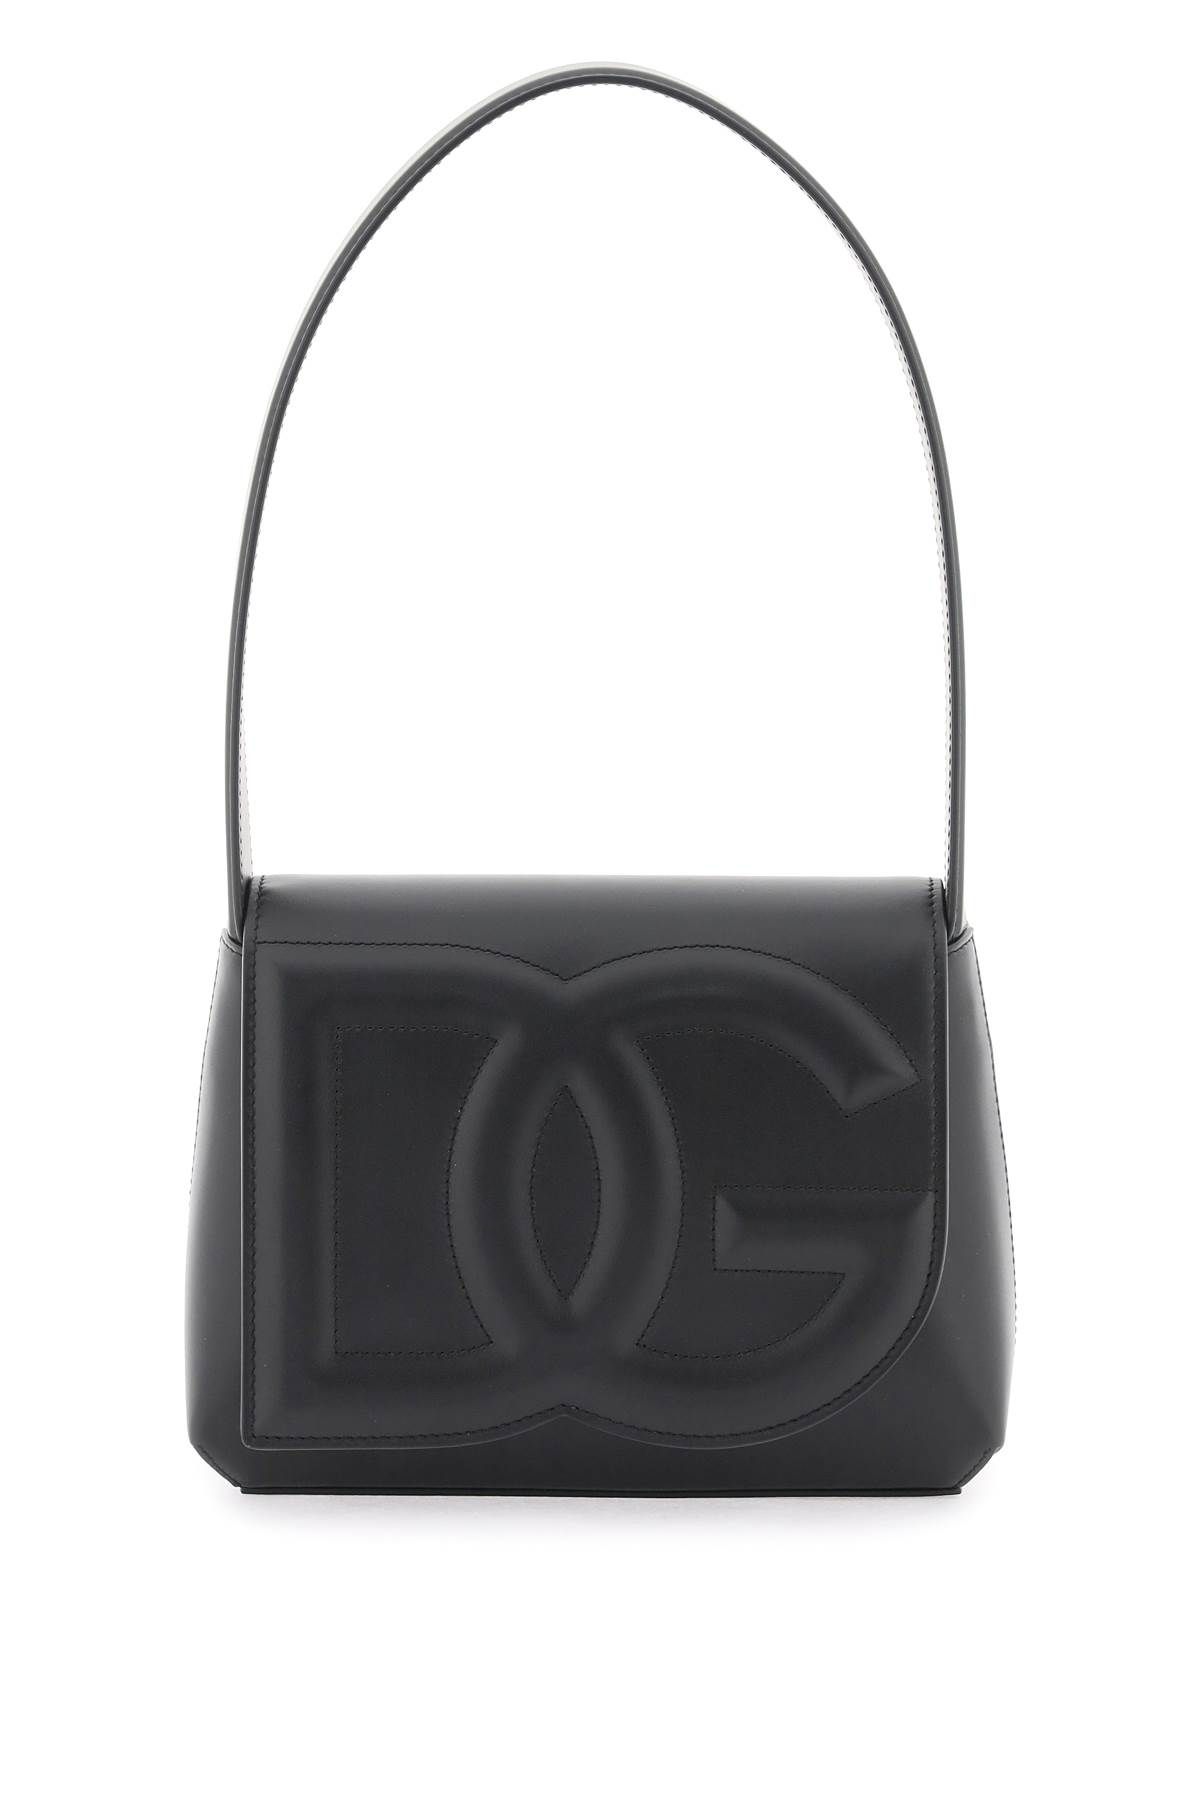 Dolce & Gabbana DOLCE & GABBANA dg logo shoulder bag